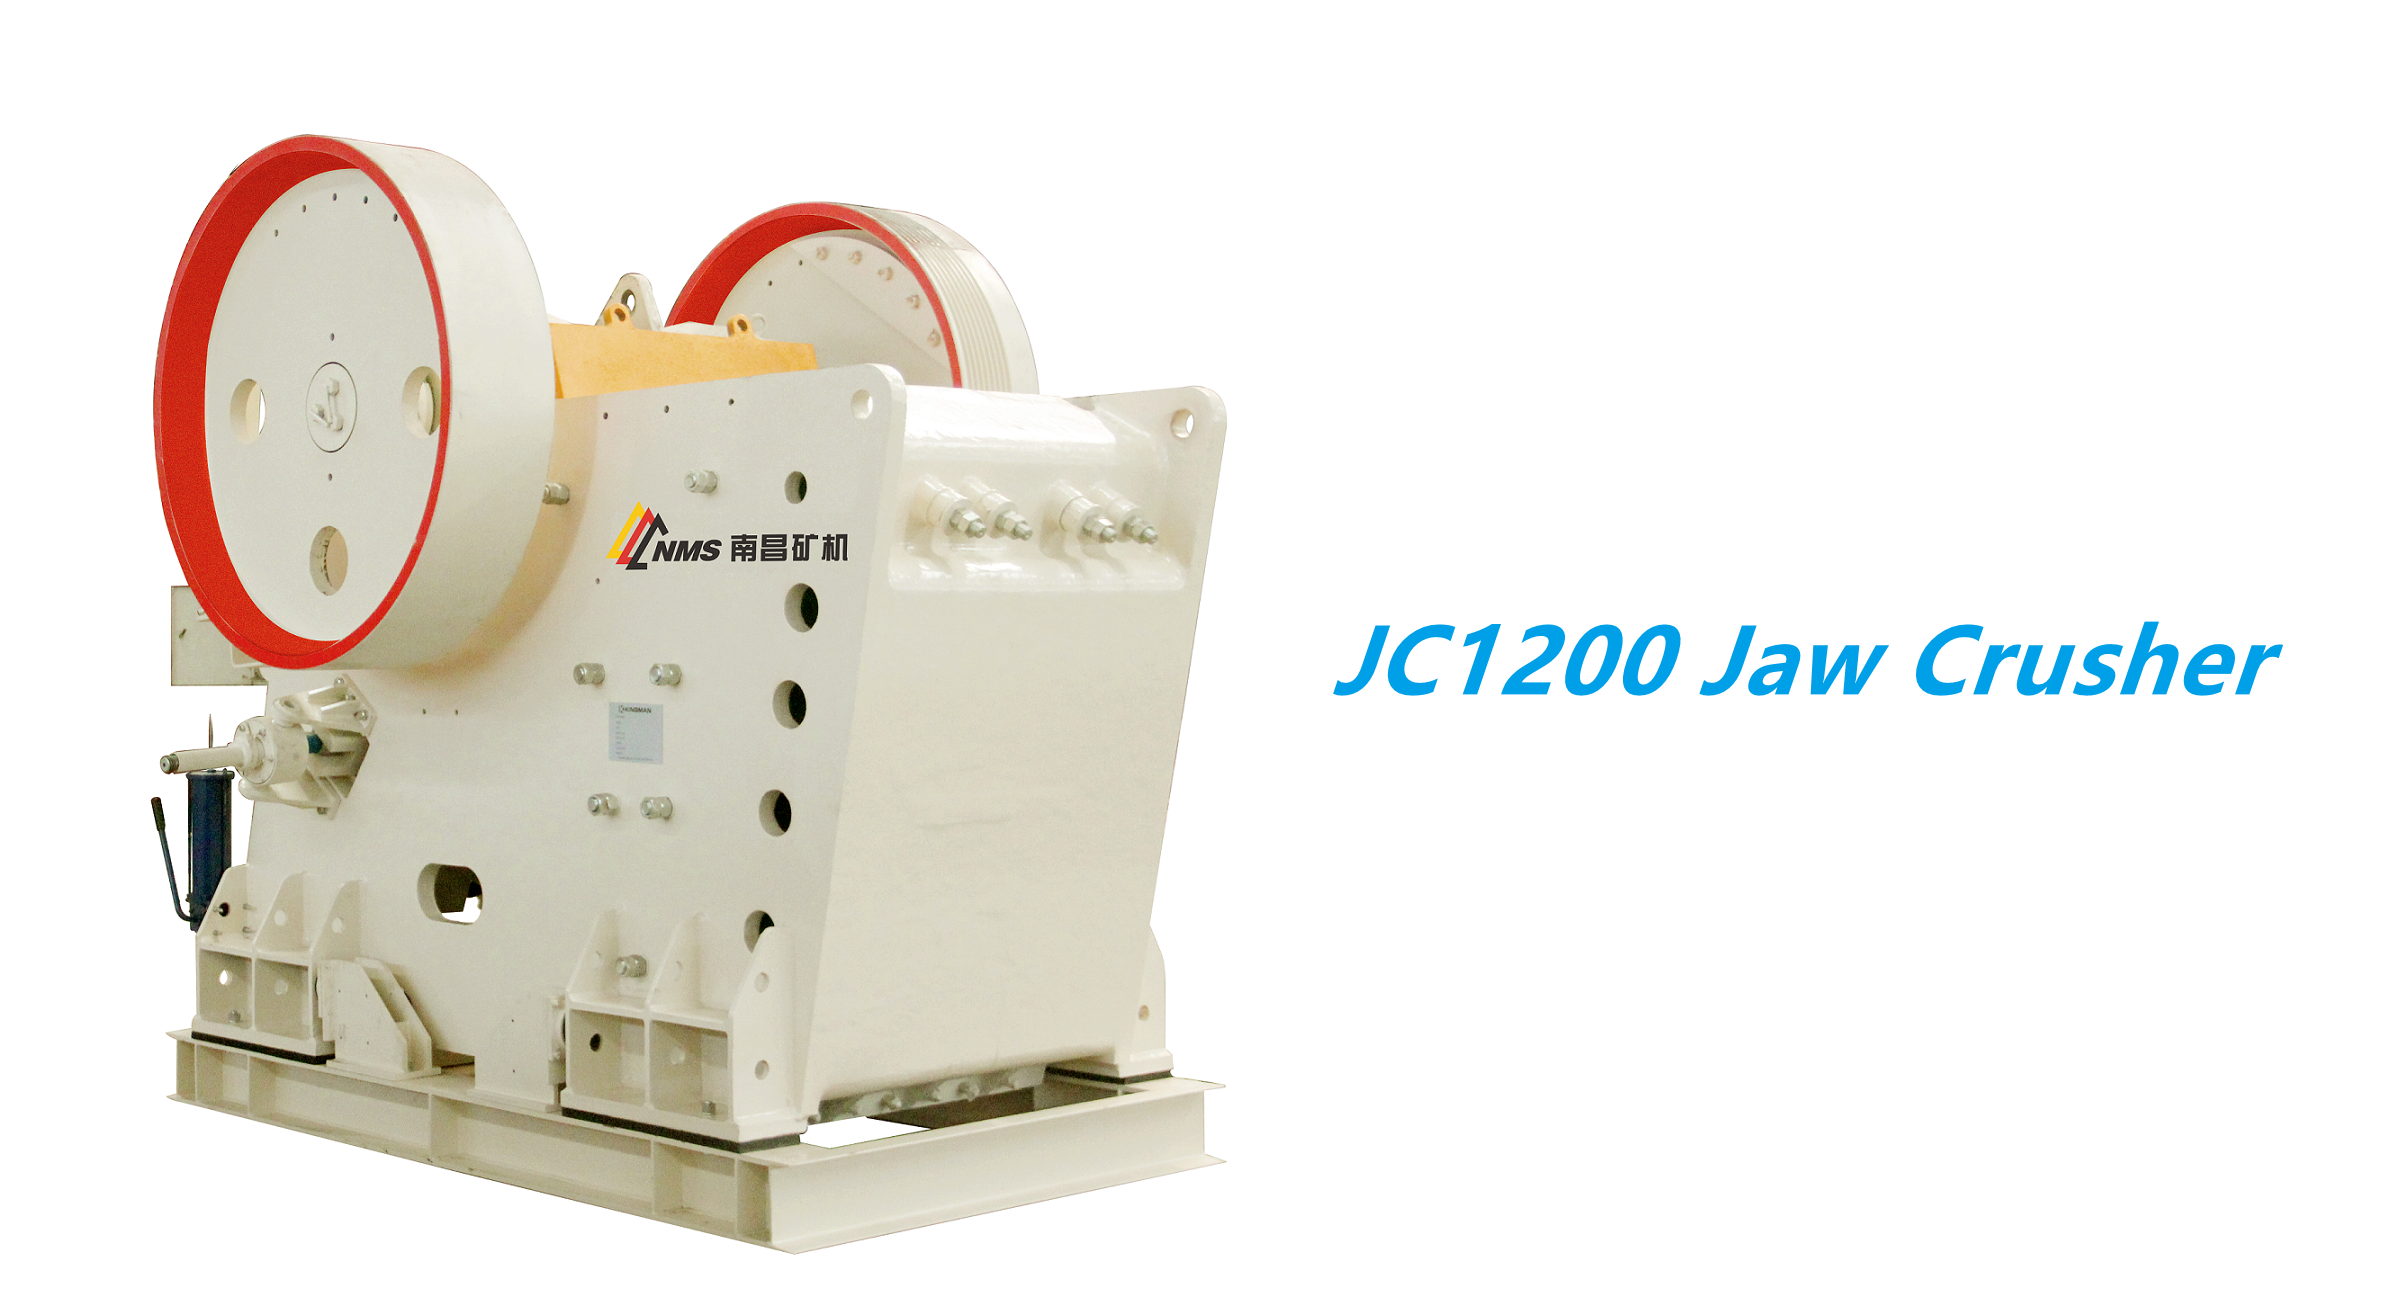 NMS JC1200 Jaw Crusher: Crushing Ores, I’m Professional!